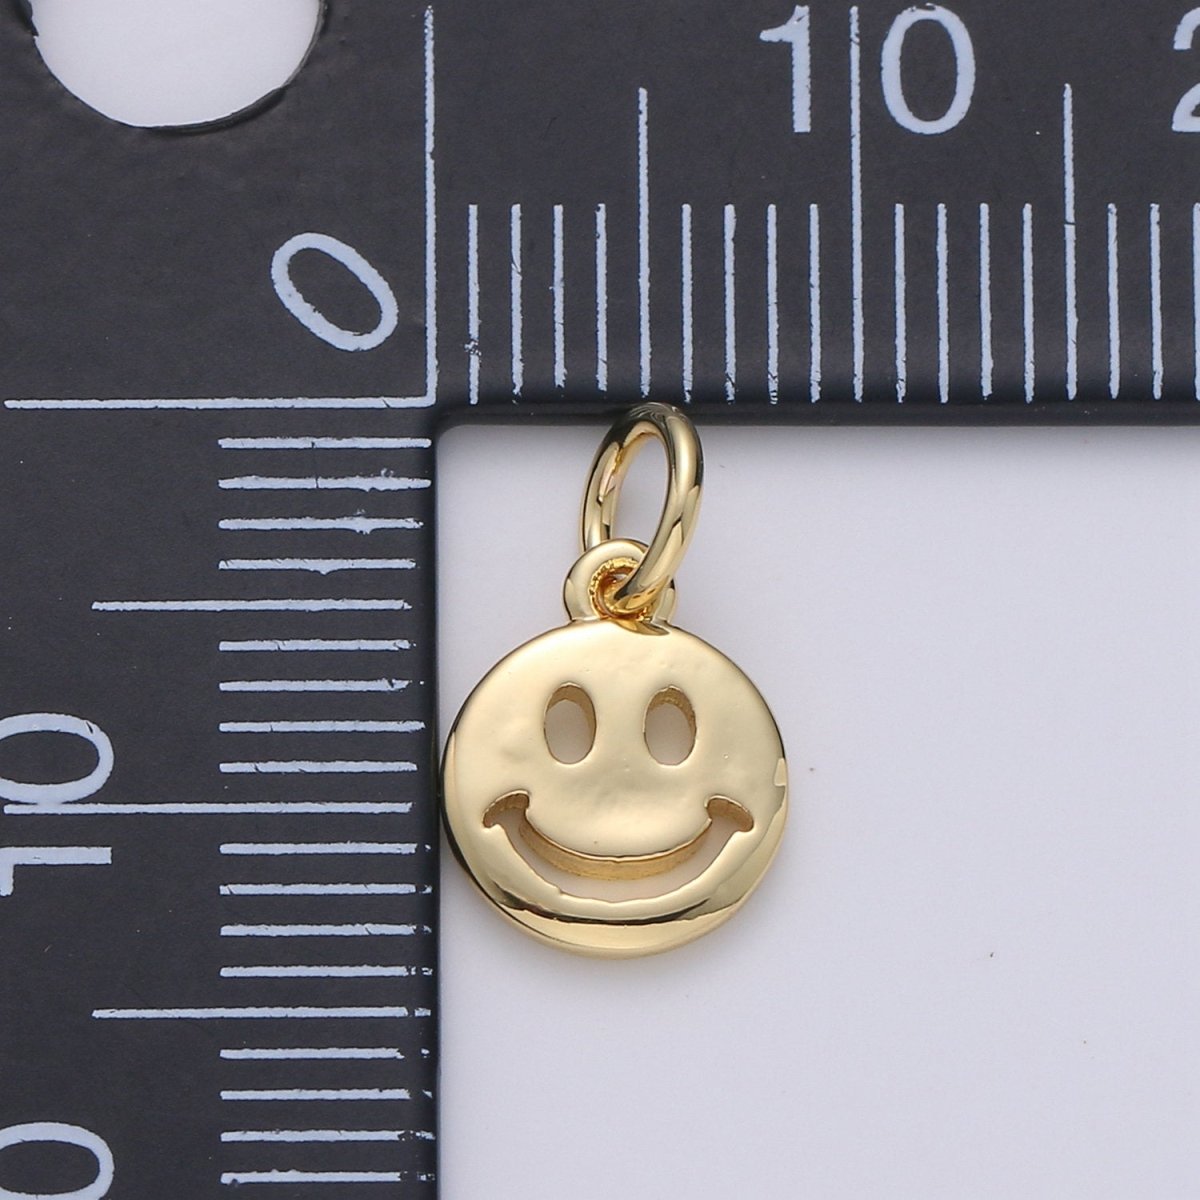 14K Gold Filled Happy Face Charm, Emoji Charm 13x8mm Gold Smile Charm Pendant Smiley Face Charms for Necklace Earring Bracelet Supply | D-651, D-697 - DLUXCA